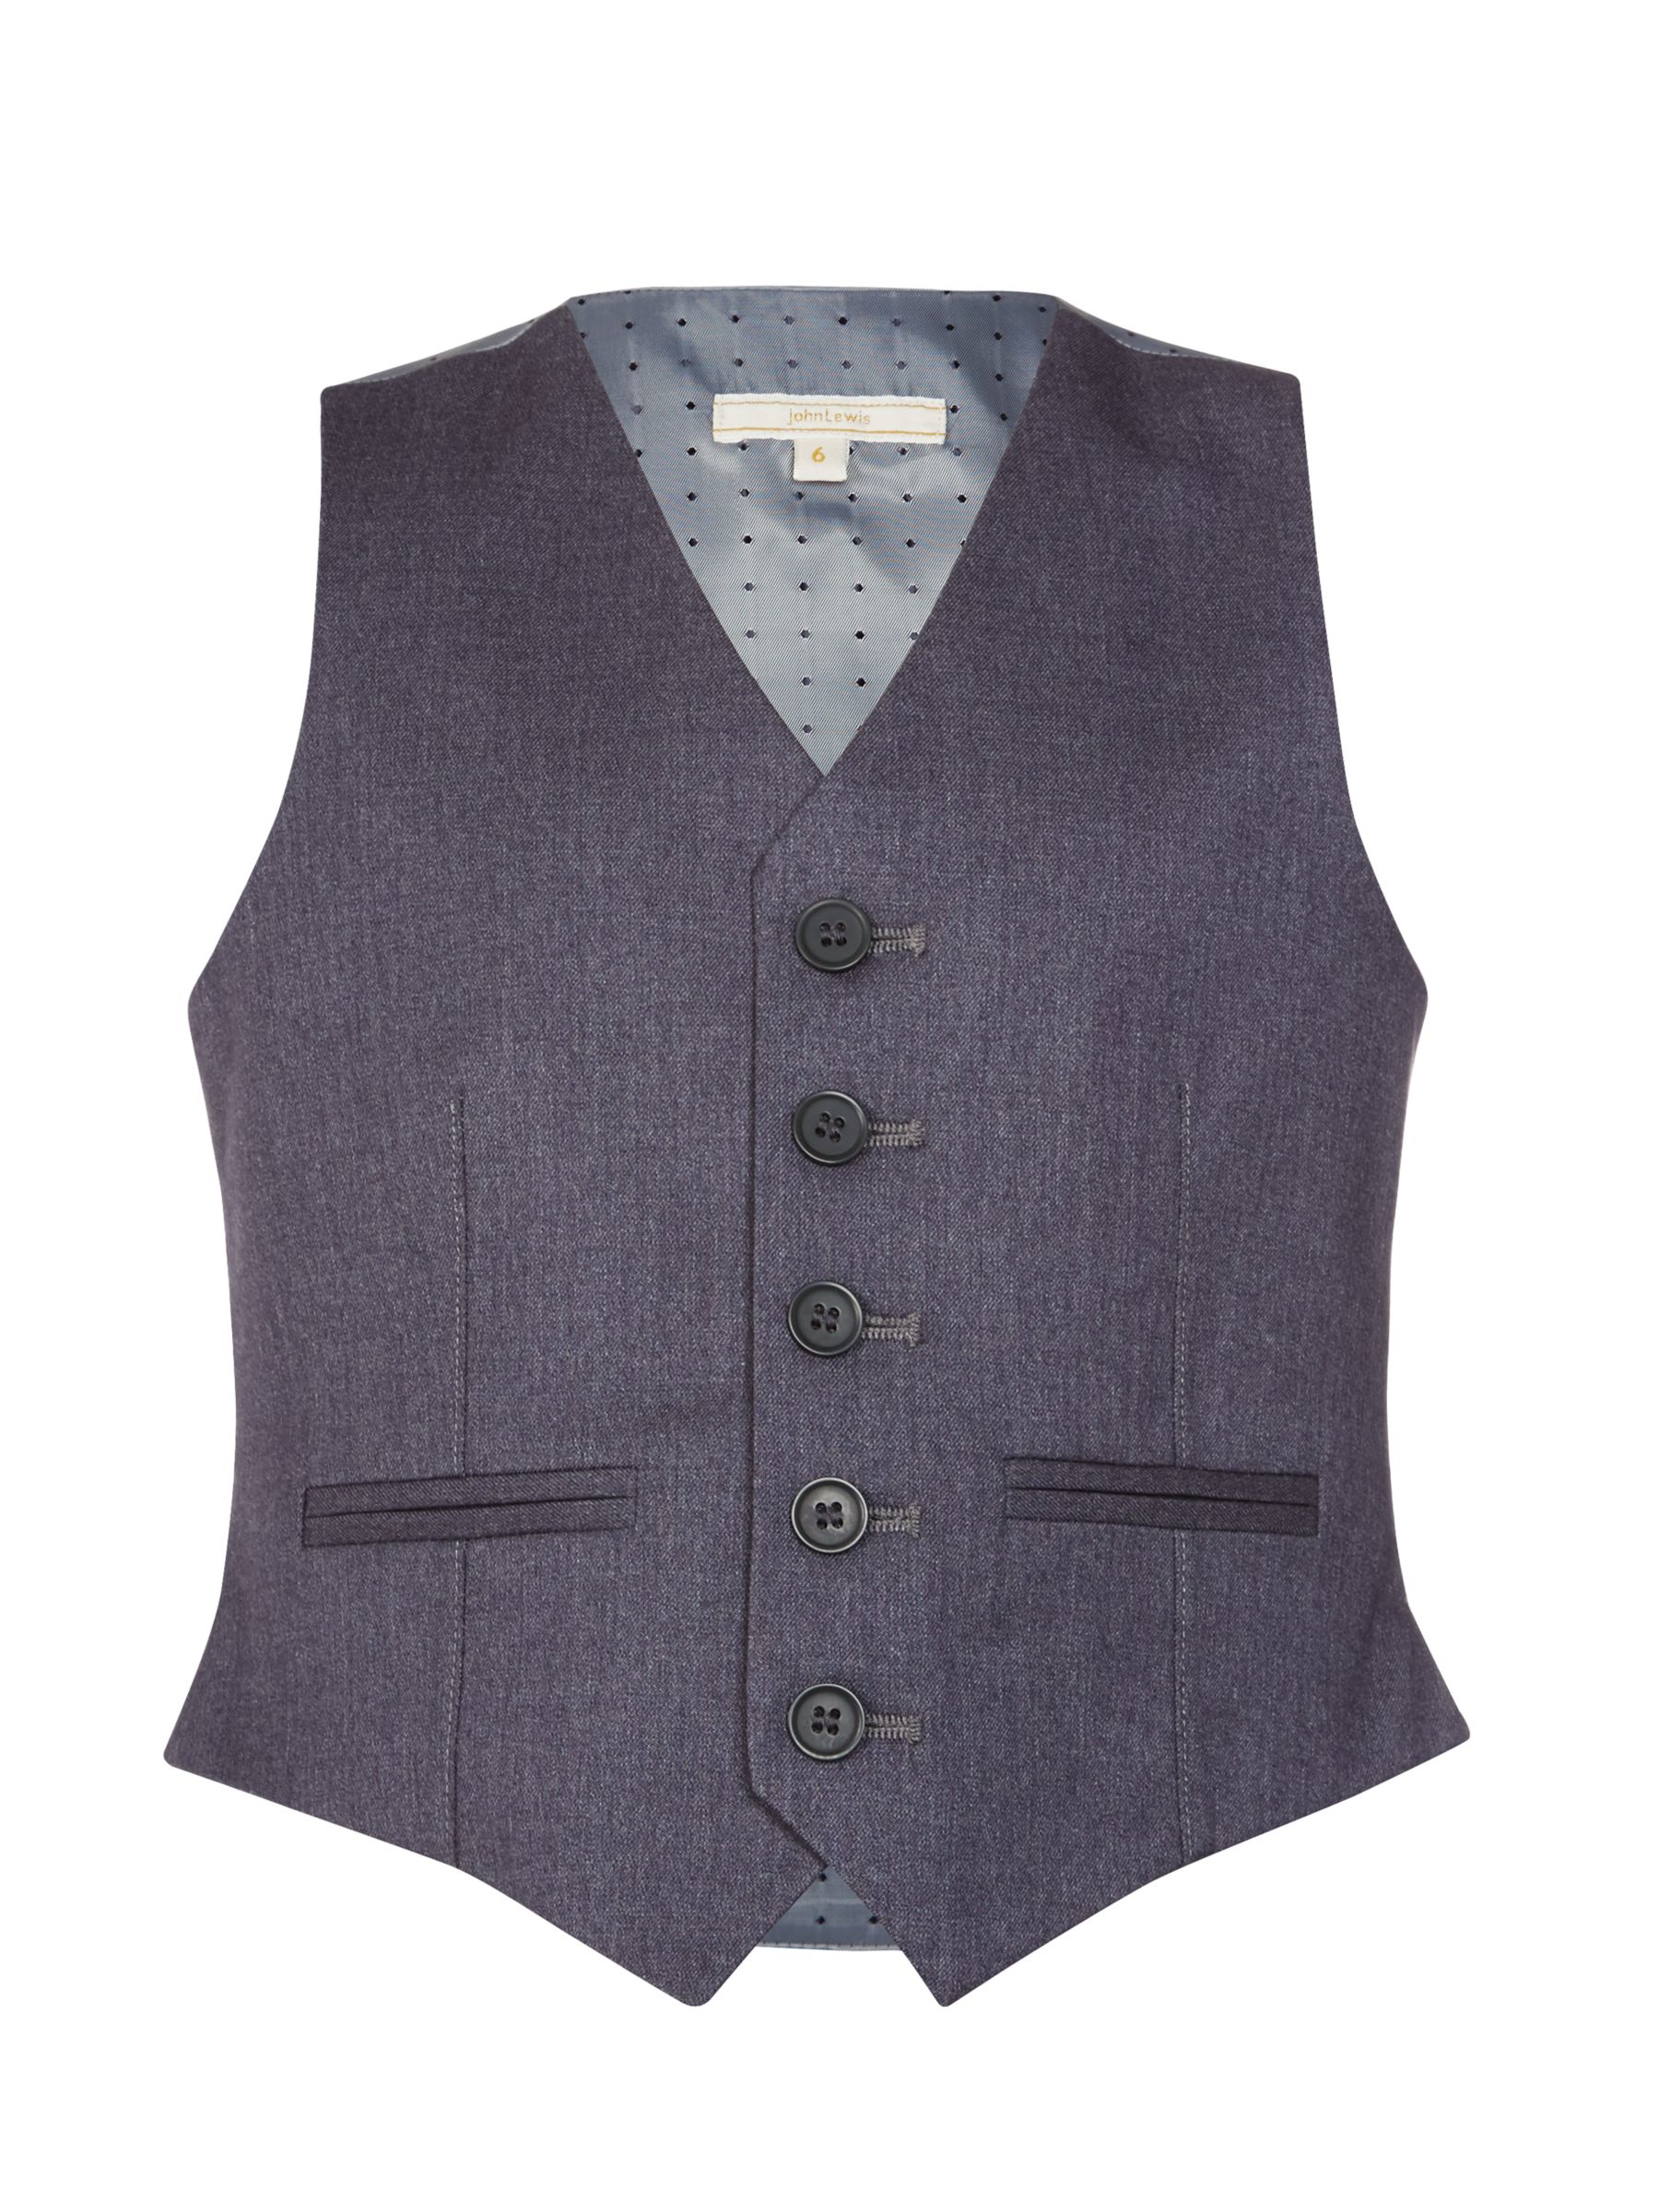 John Lewis Heirloom Collection Boys' Suit Waistcoat, Grey